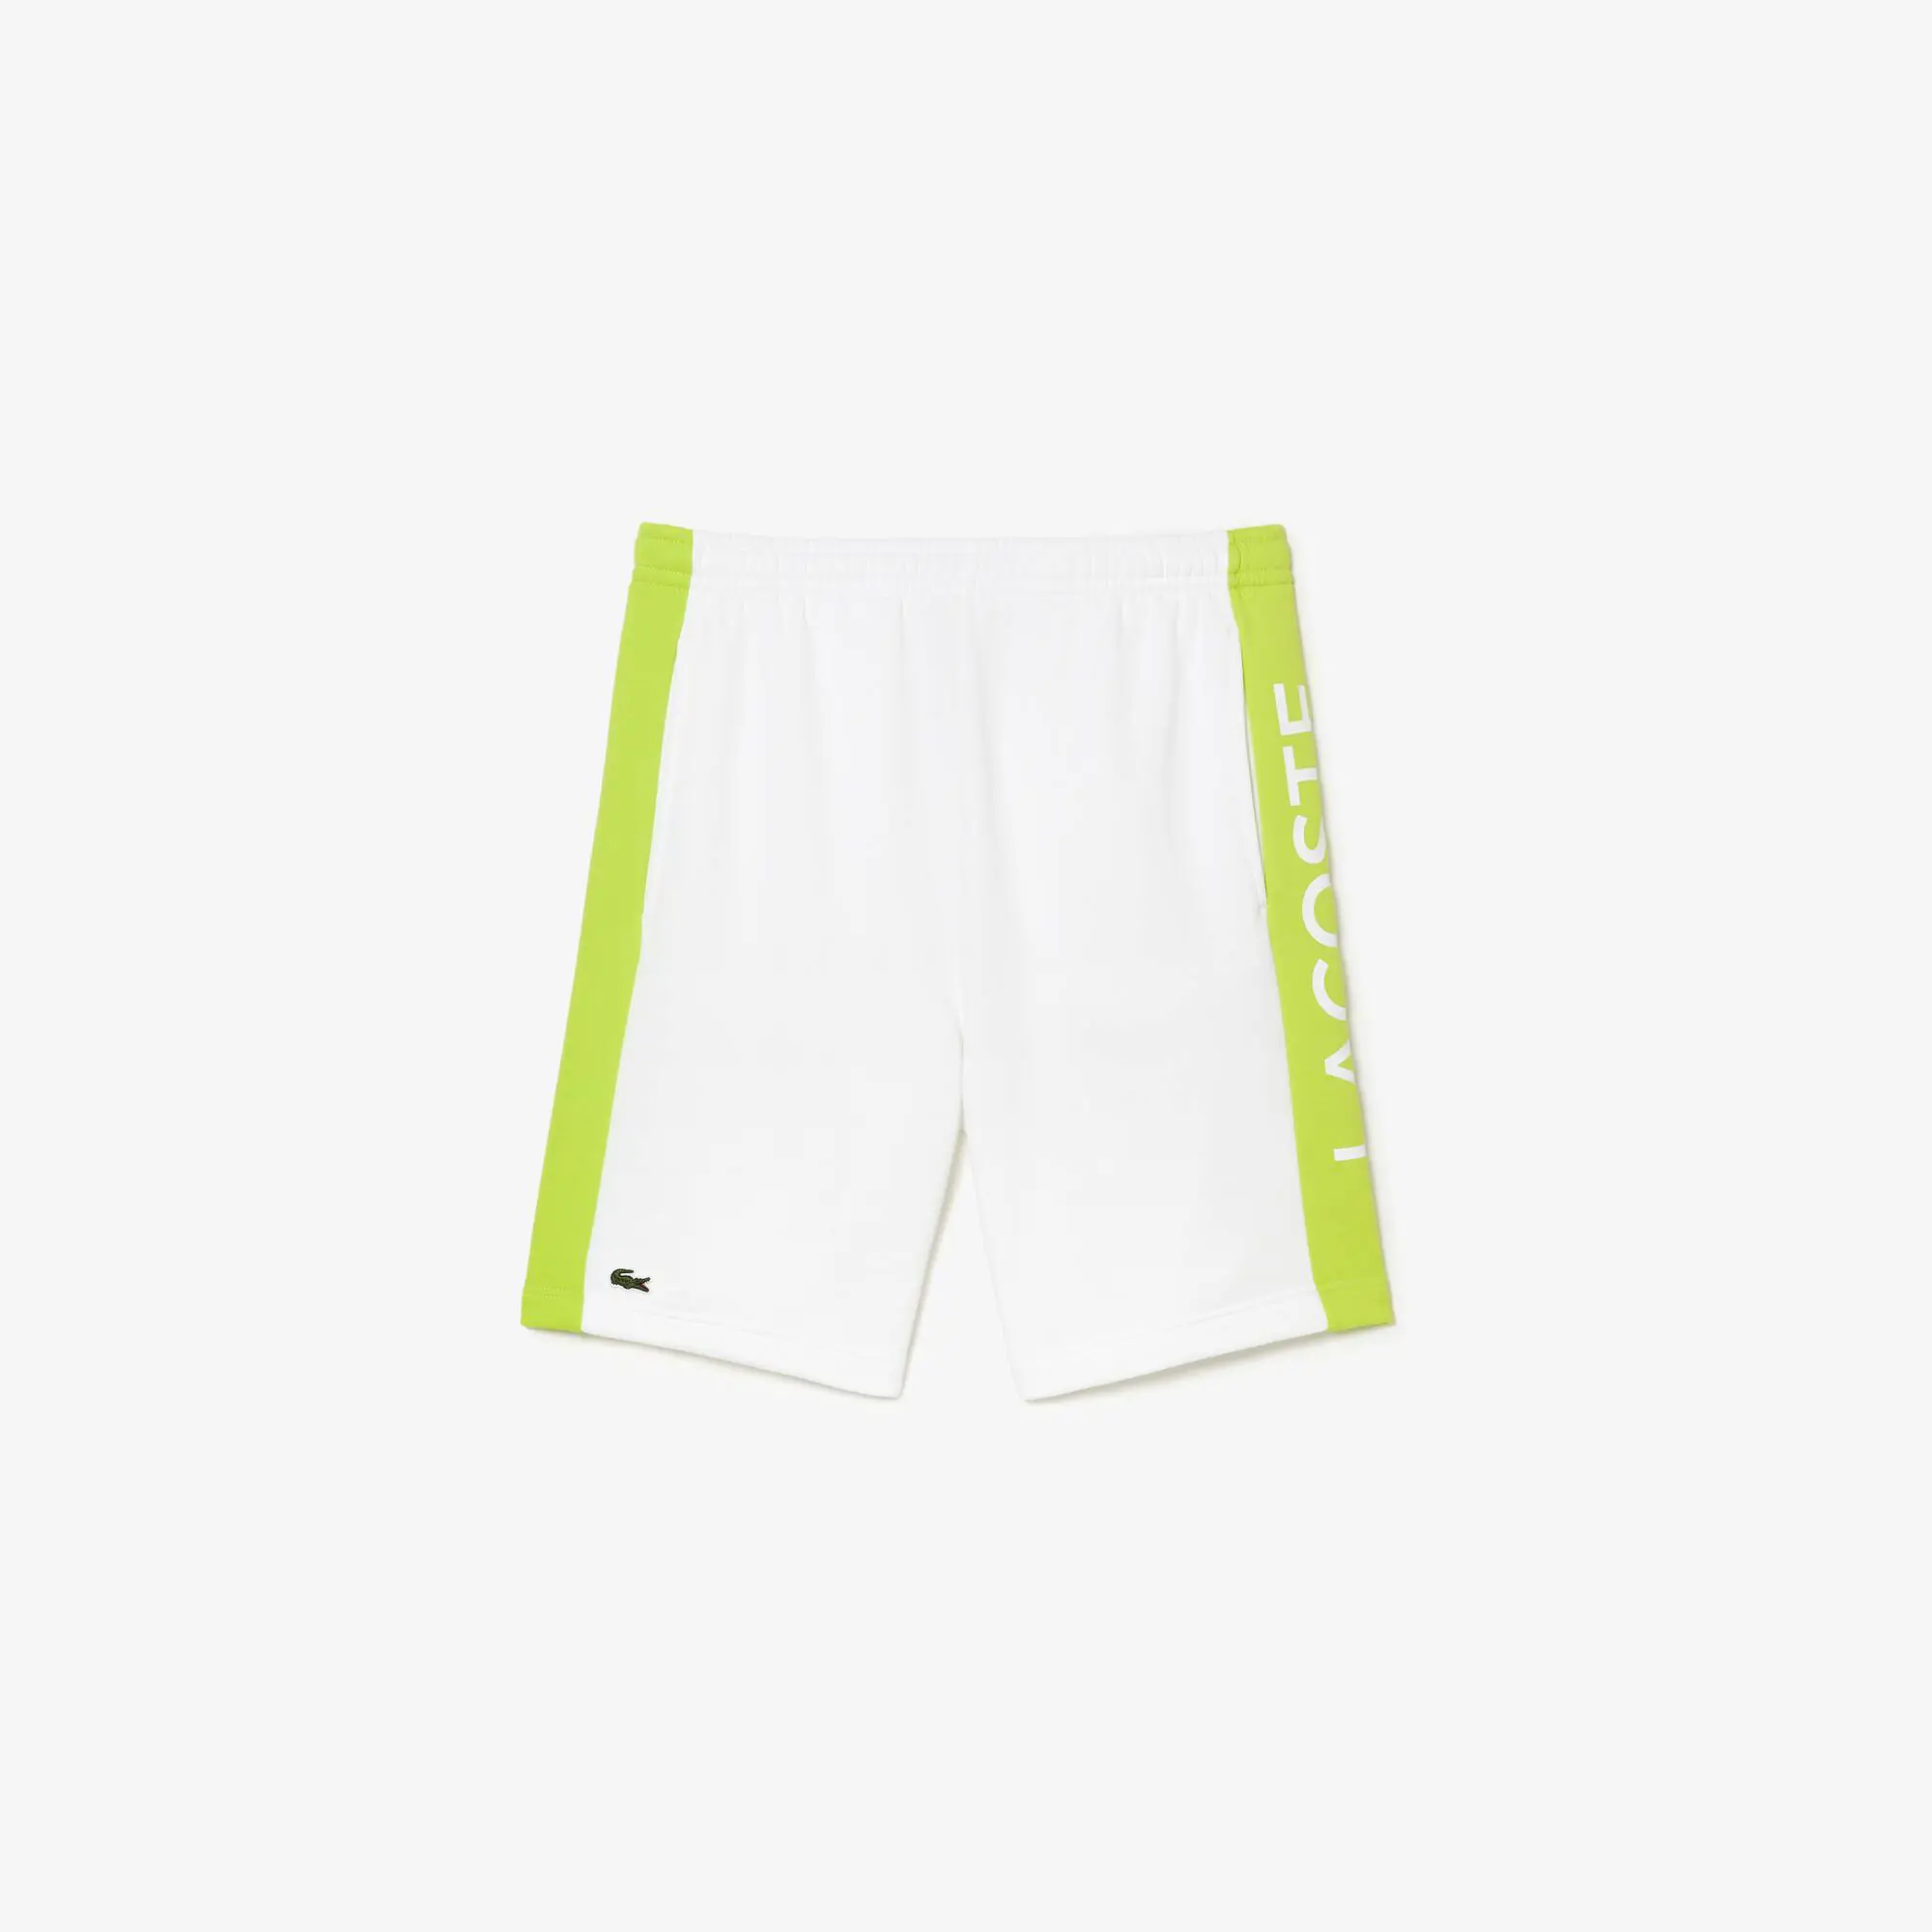 Lacoste Men’s Regular Fit Cotton Fleece Colourblock Shorts. 2